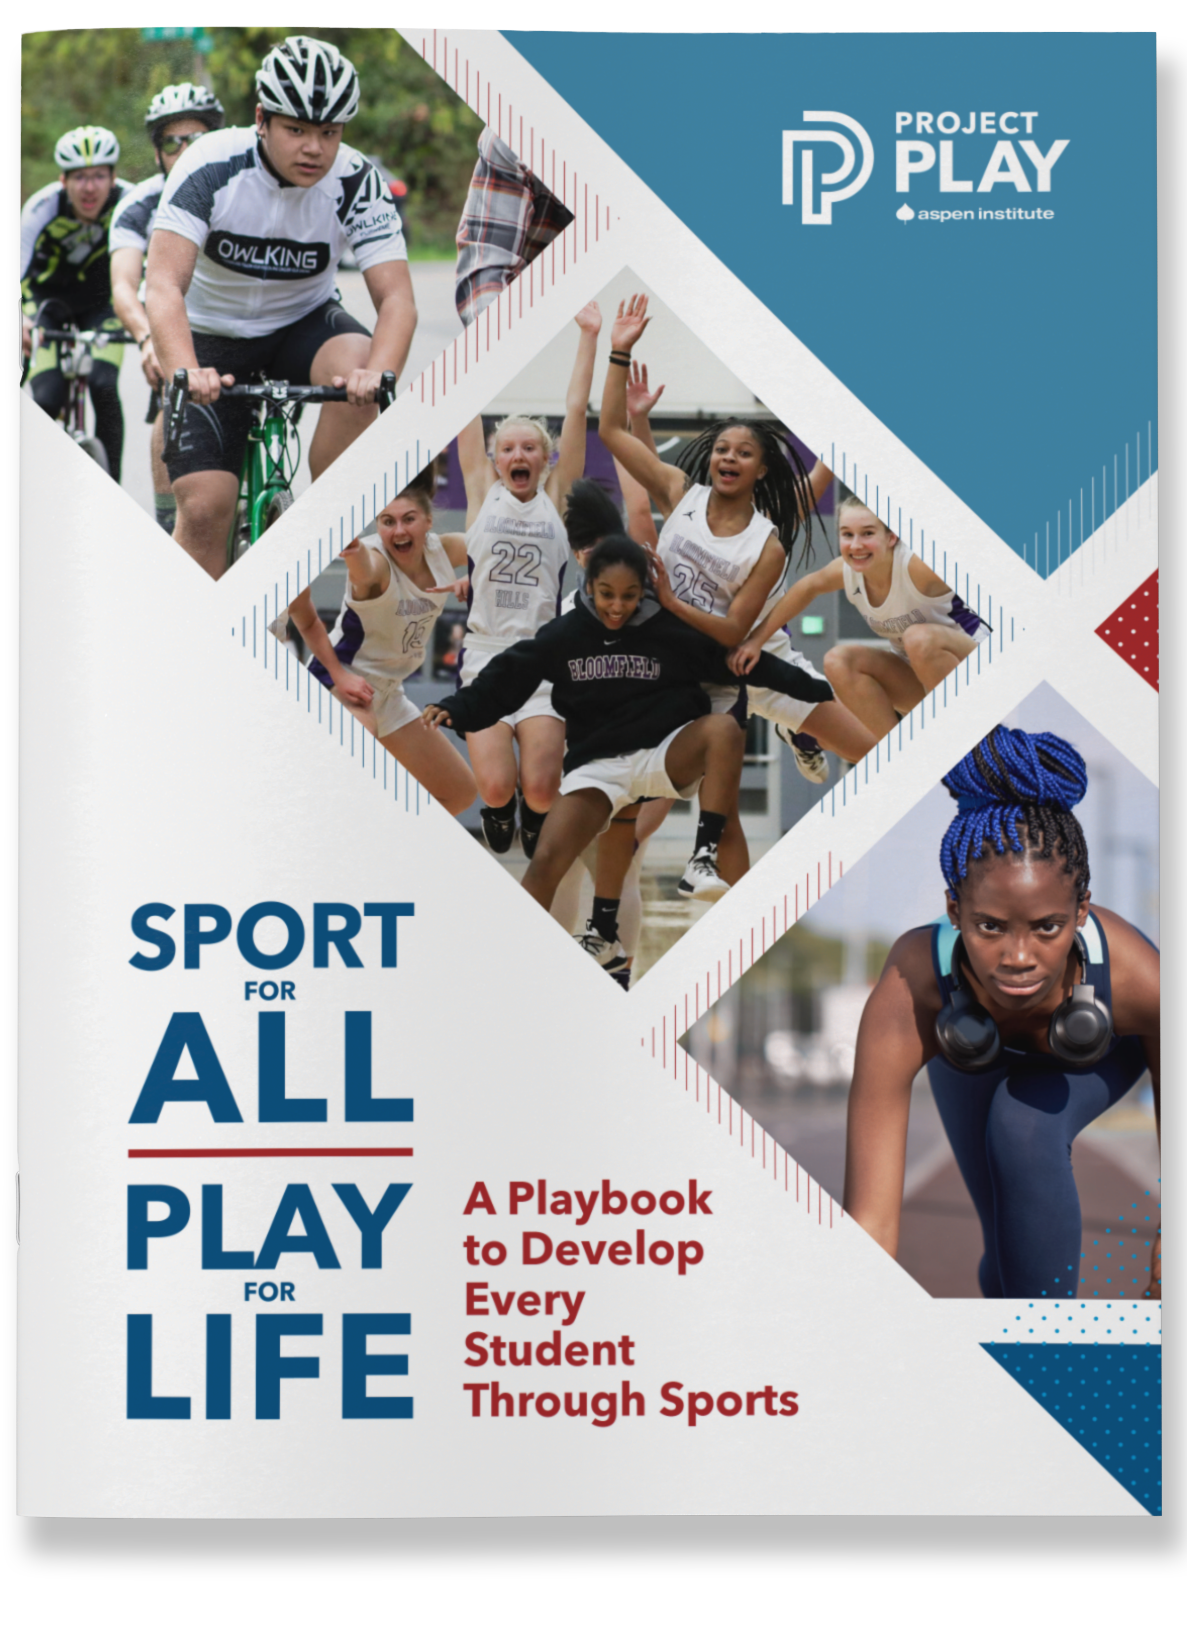 Youth Sports Organizations - Project Play Southeast Michigan